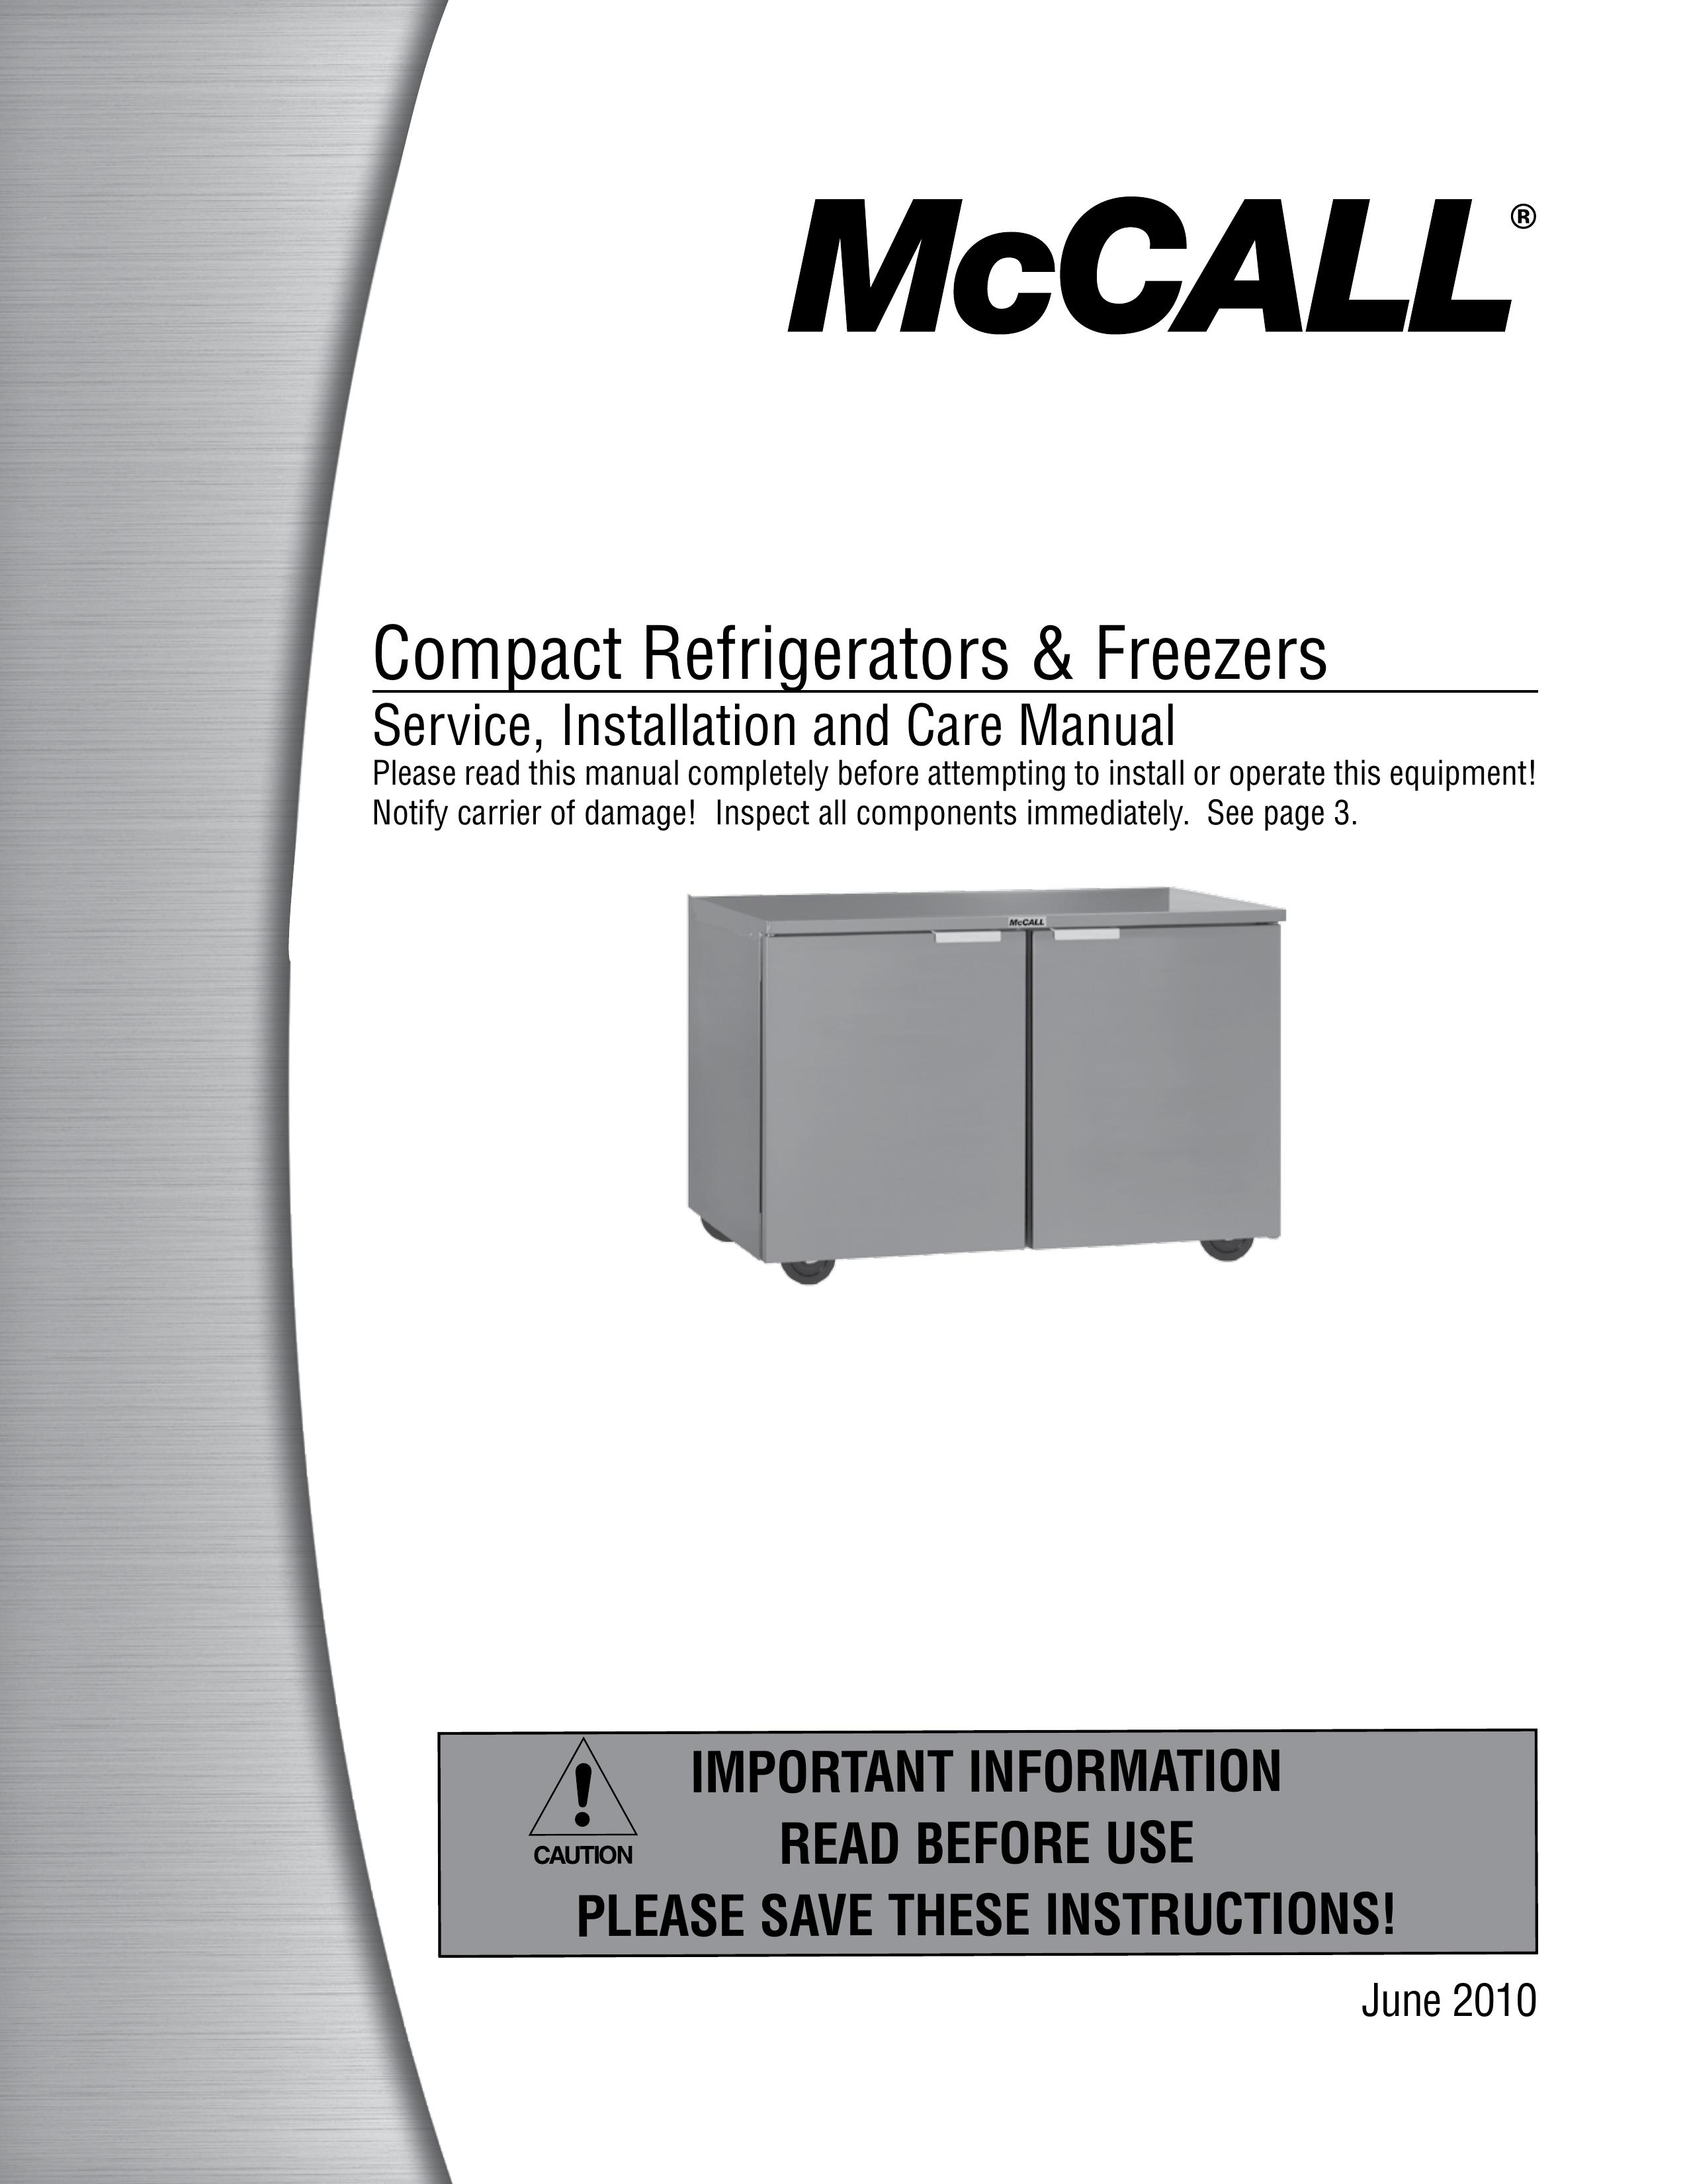 McCall Refrigeration MCCF27 Refrigerator User Manual